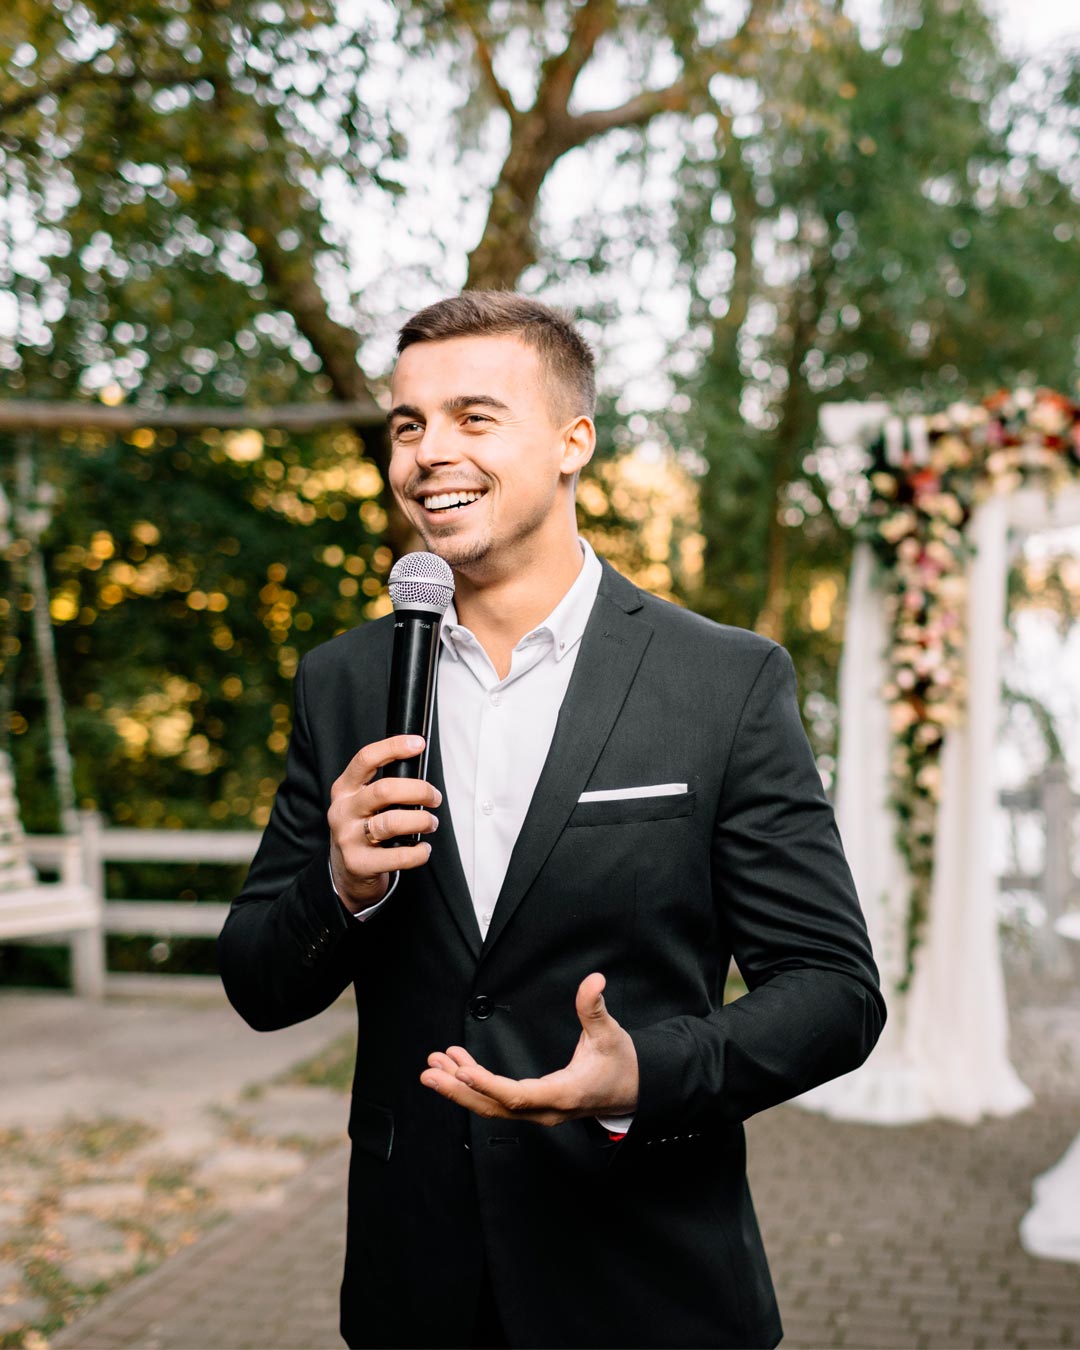 wedding welcoming speeches examples